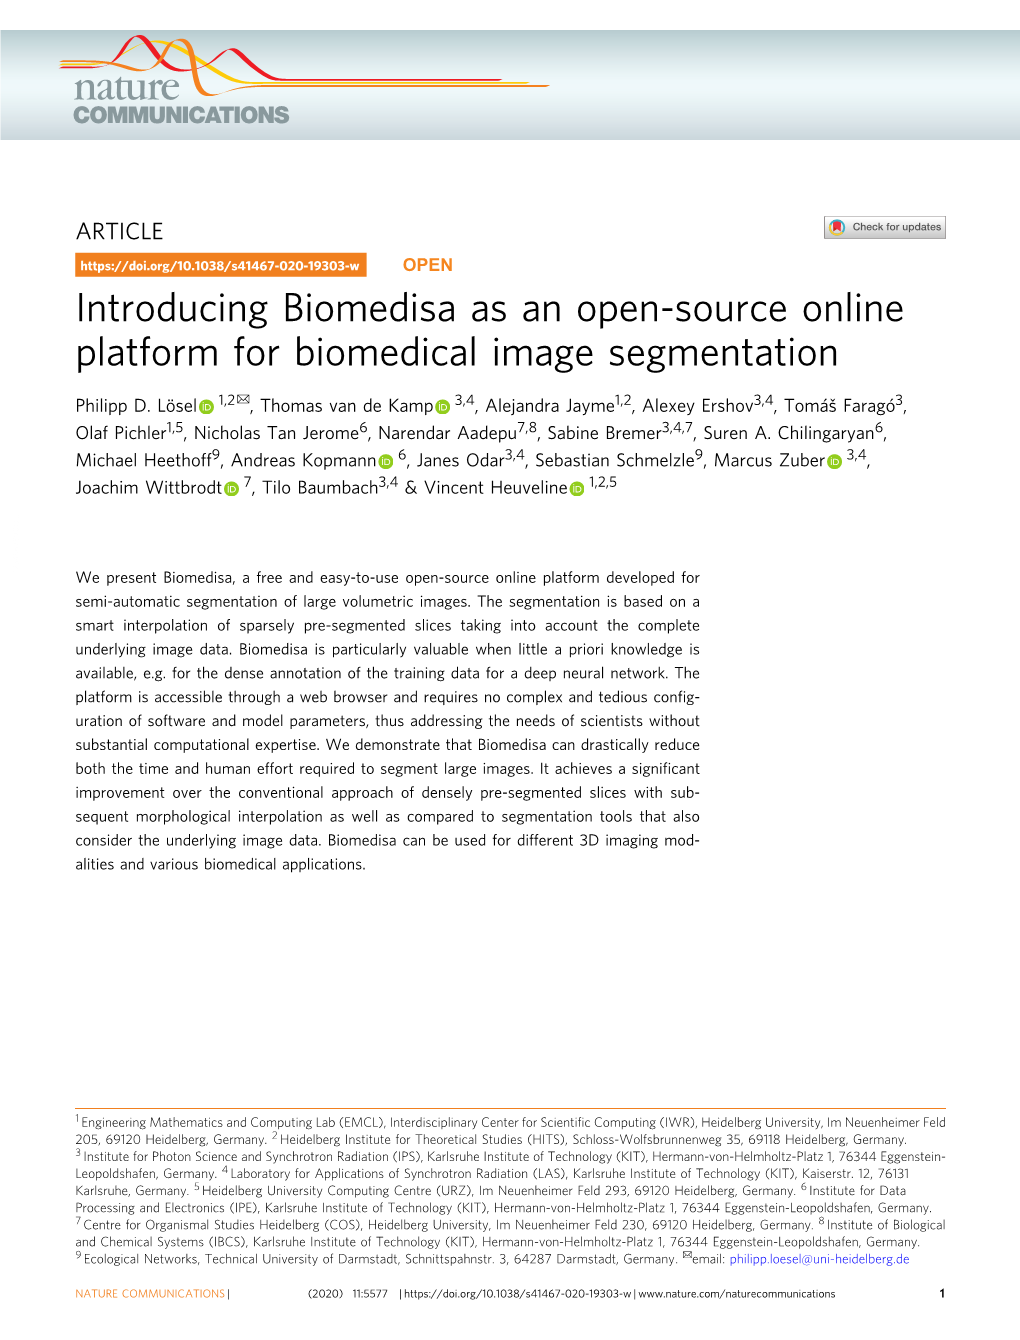 Introducing Biomedisa As an Open-Source Online Platform for Biomedical Image Segmentation ✉ Philipp D